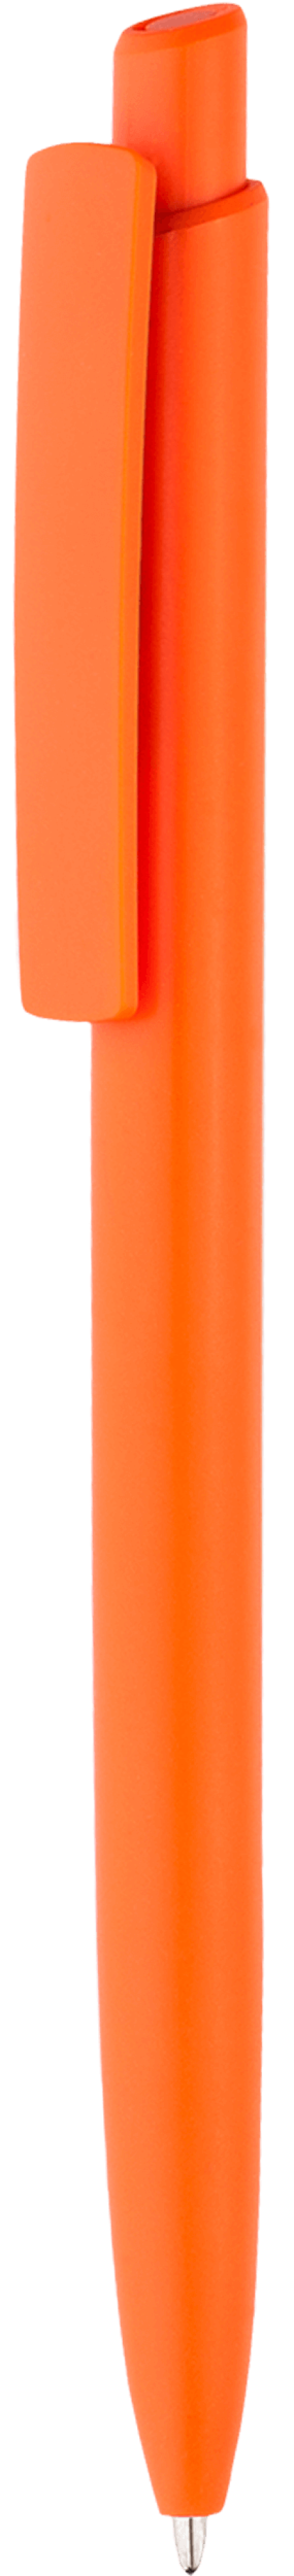 Ручка POLO COLOR Оранжевая 1303.05